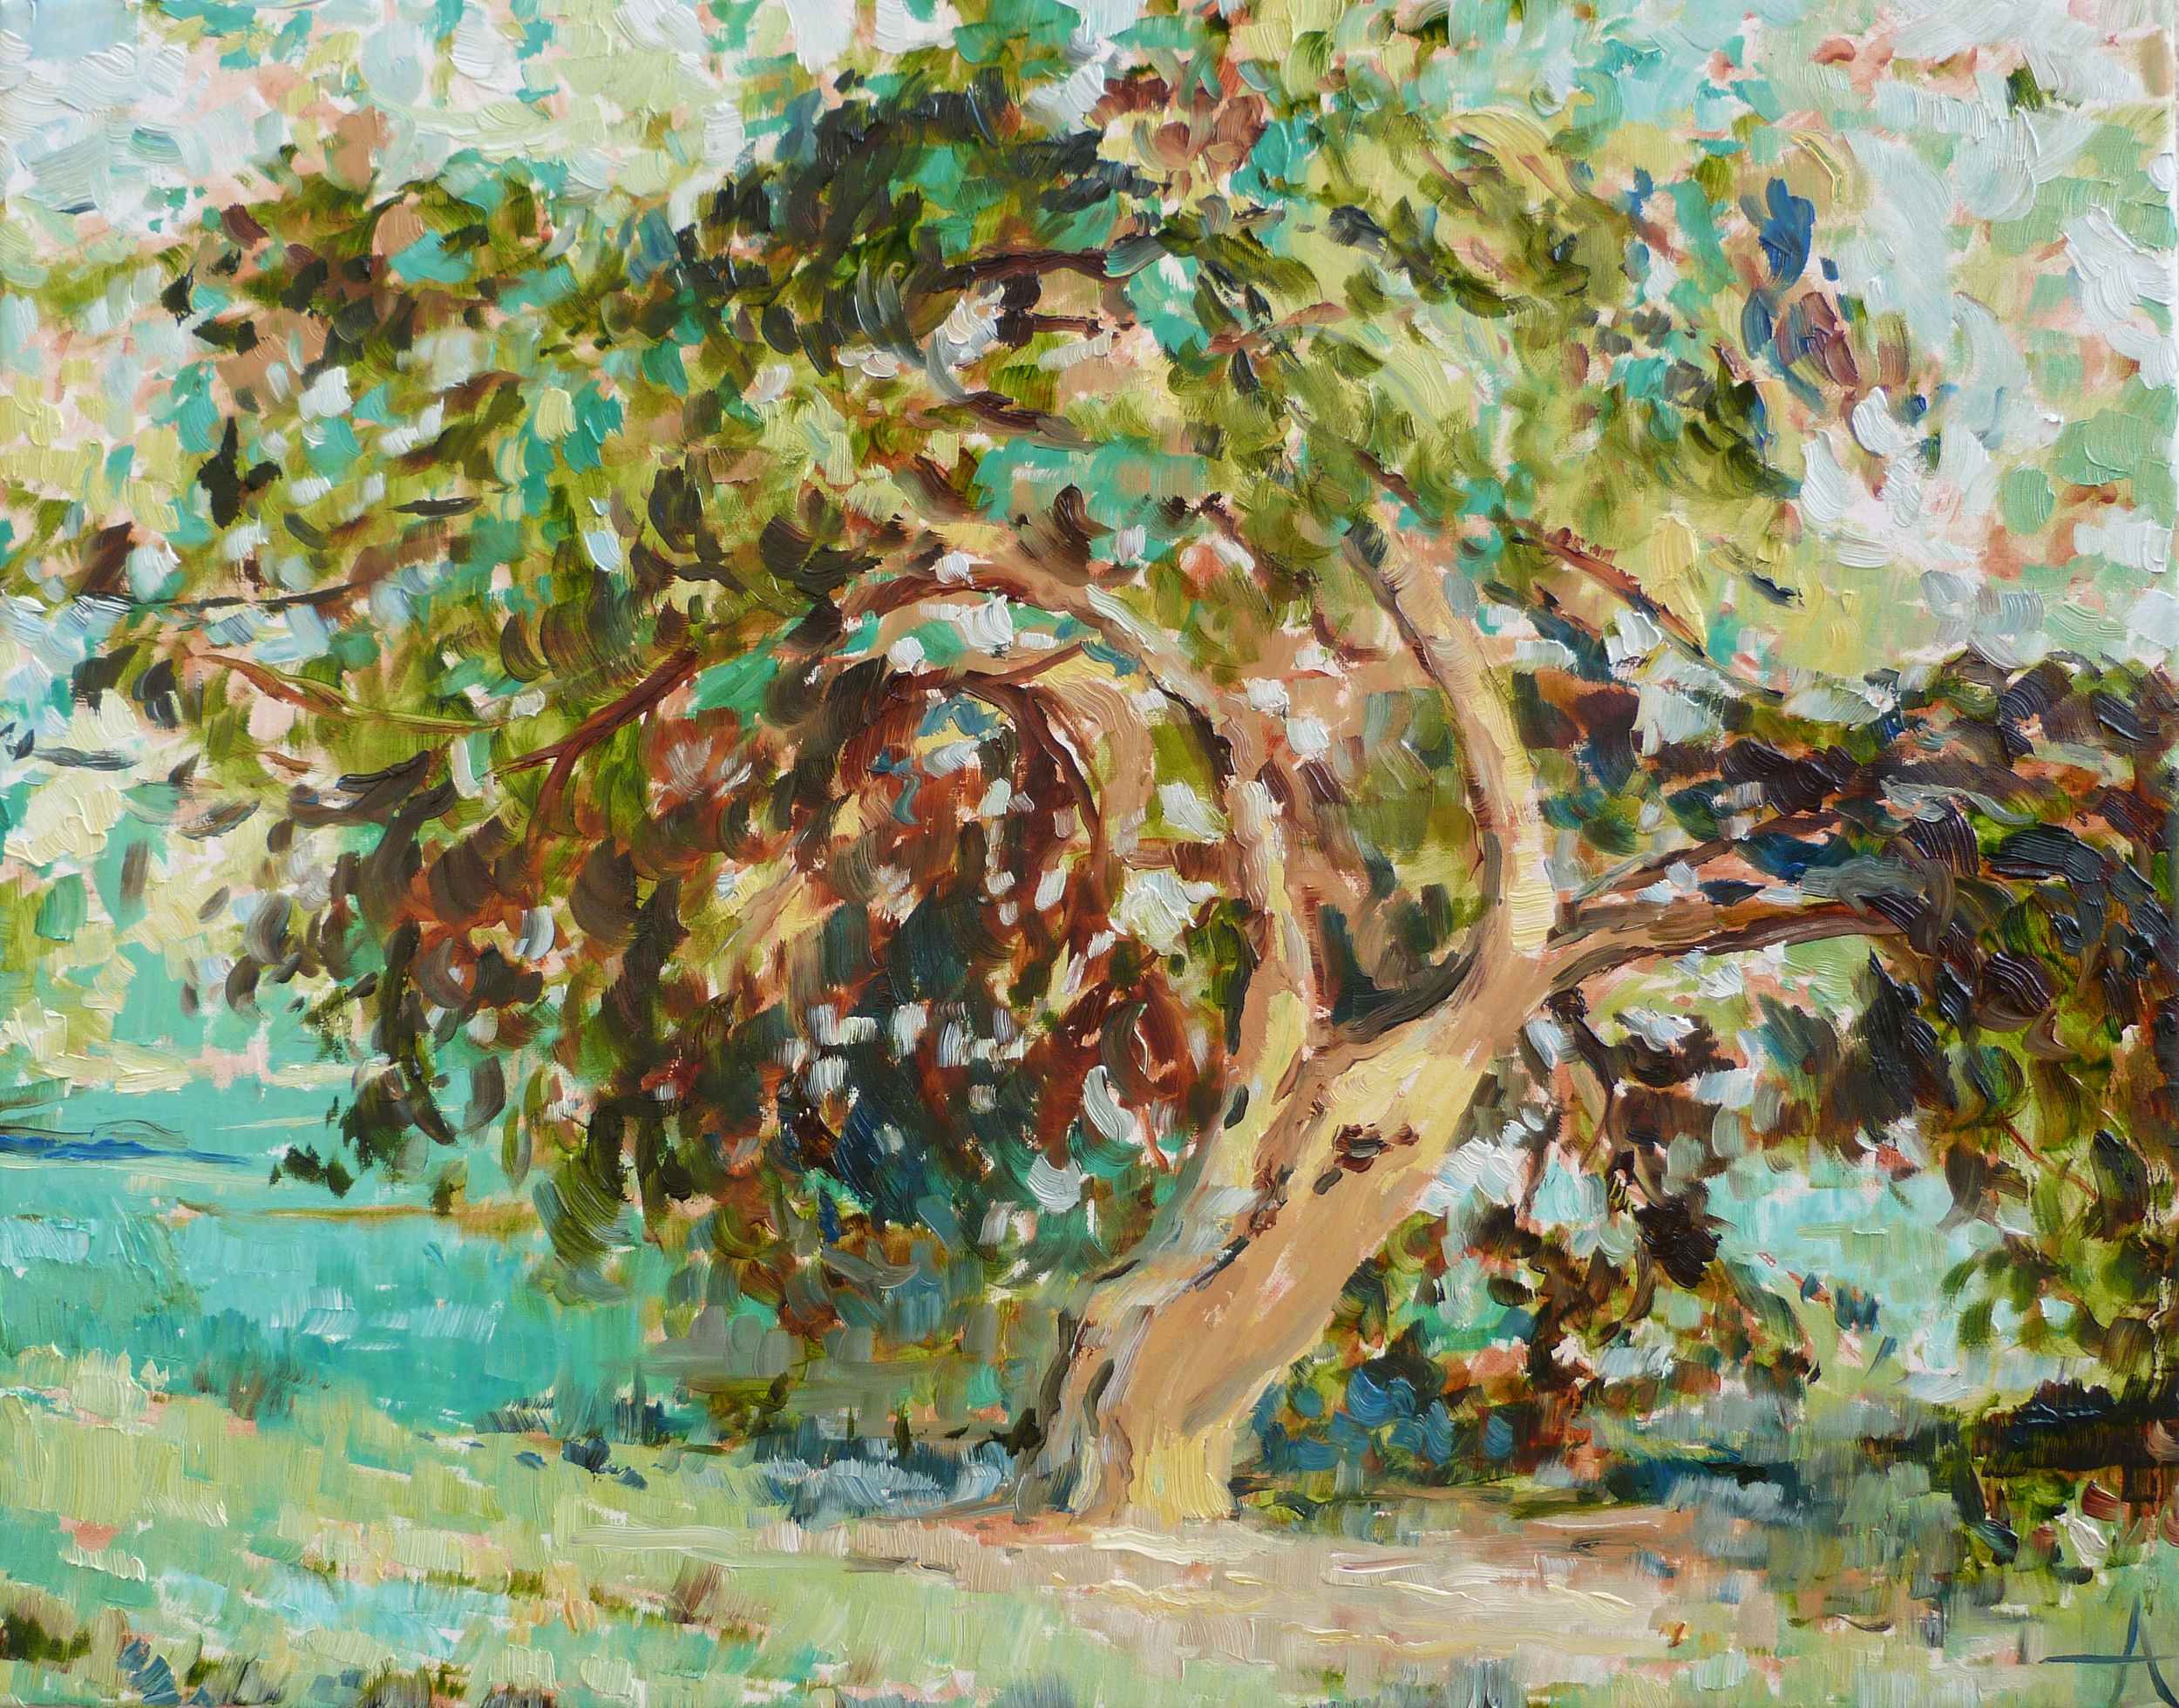 SOLD, The Climbing Tree, Copyright 2013 Hirschten, Oil on Canvas, 16" x 20"